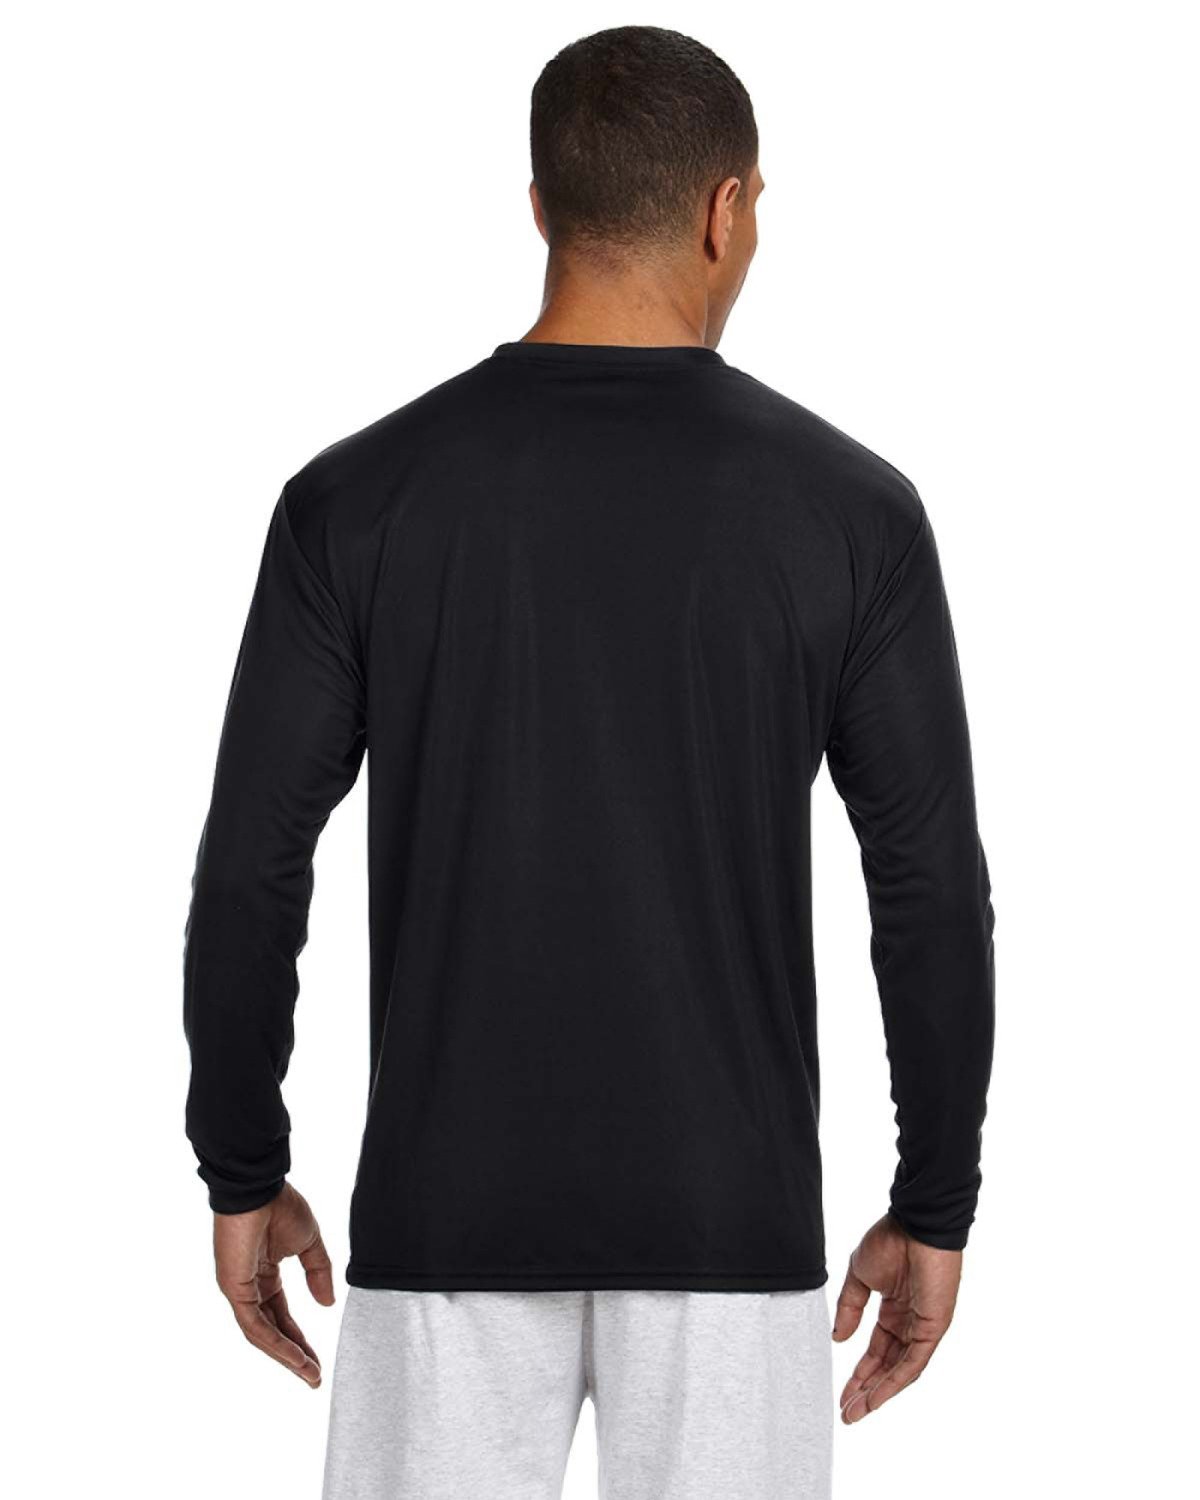 A4 Men's Cooling Performance Long Sleeve T-Shirt